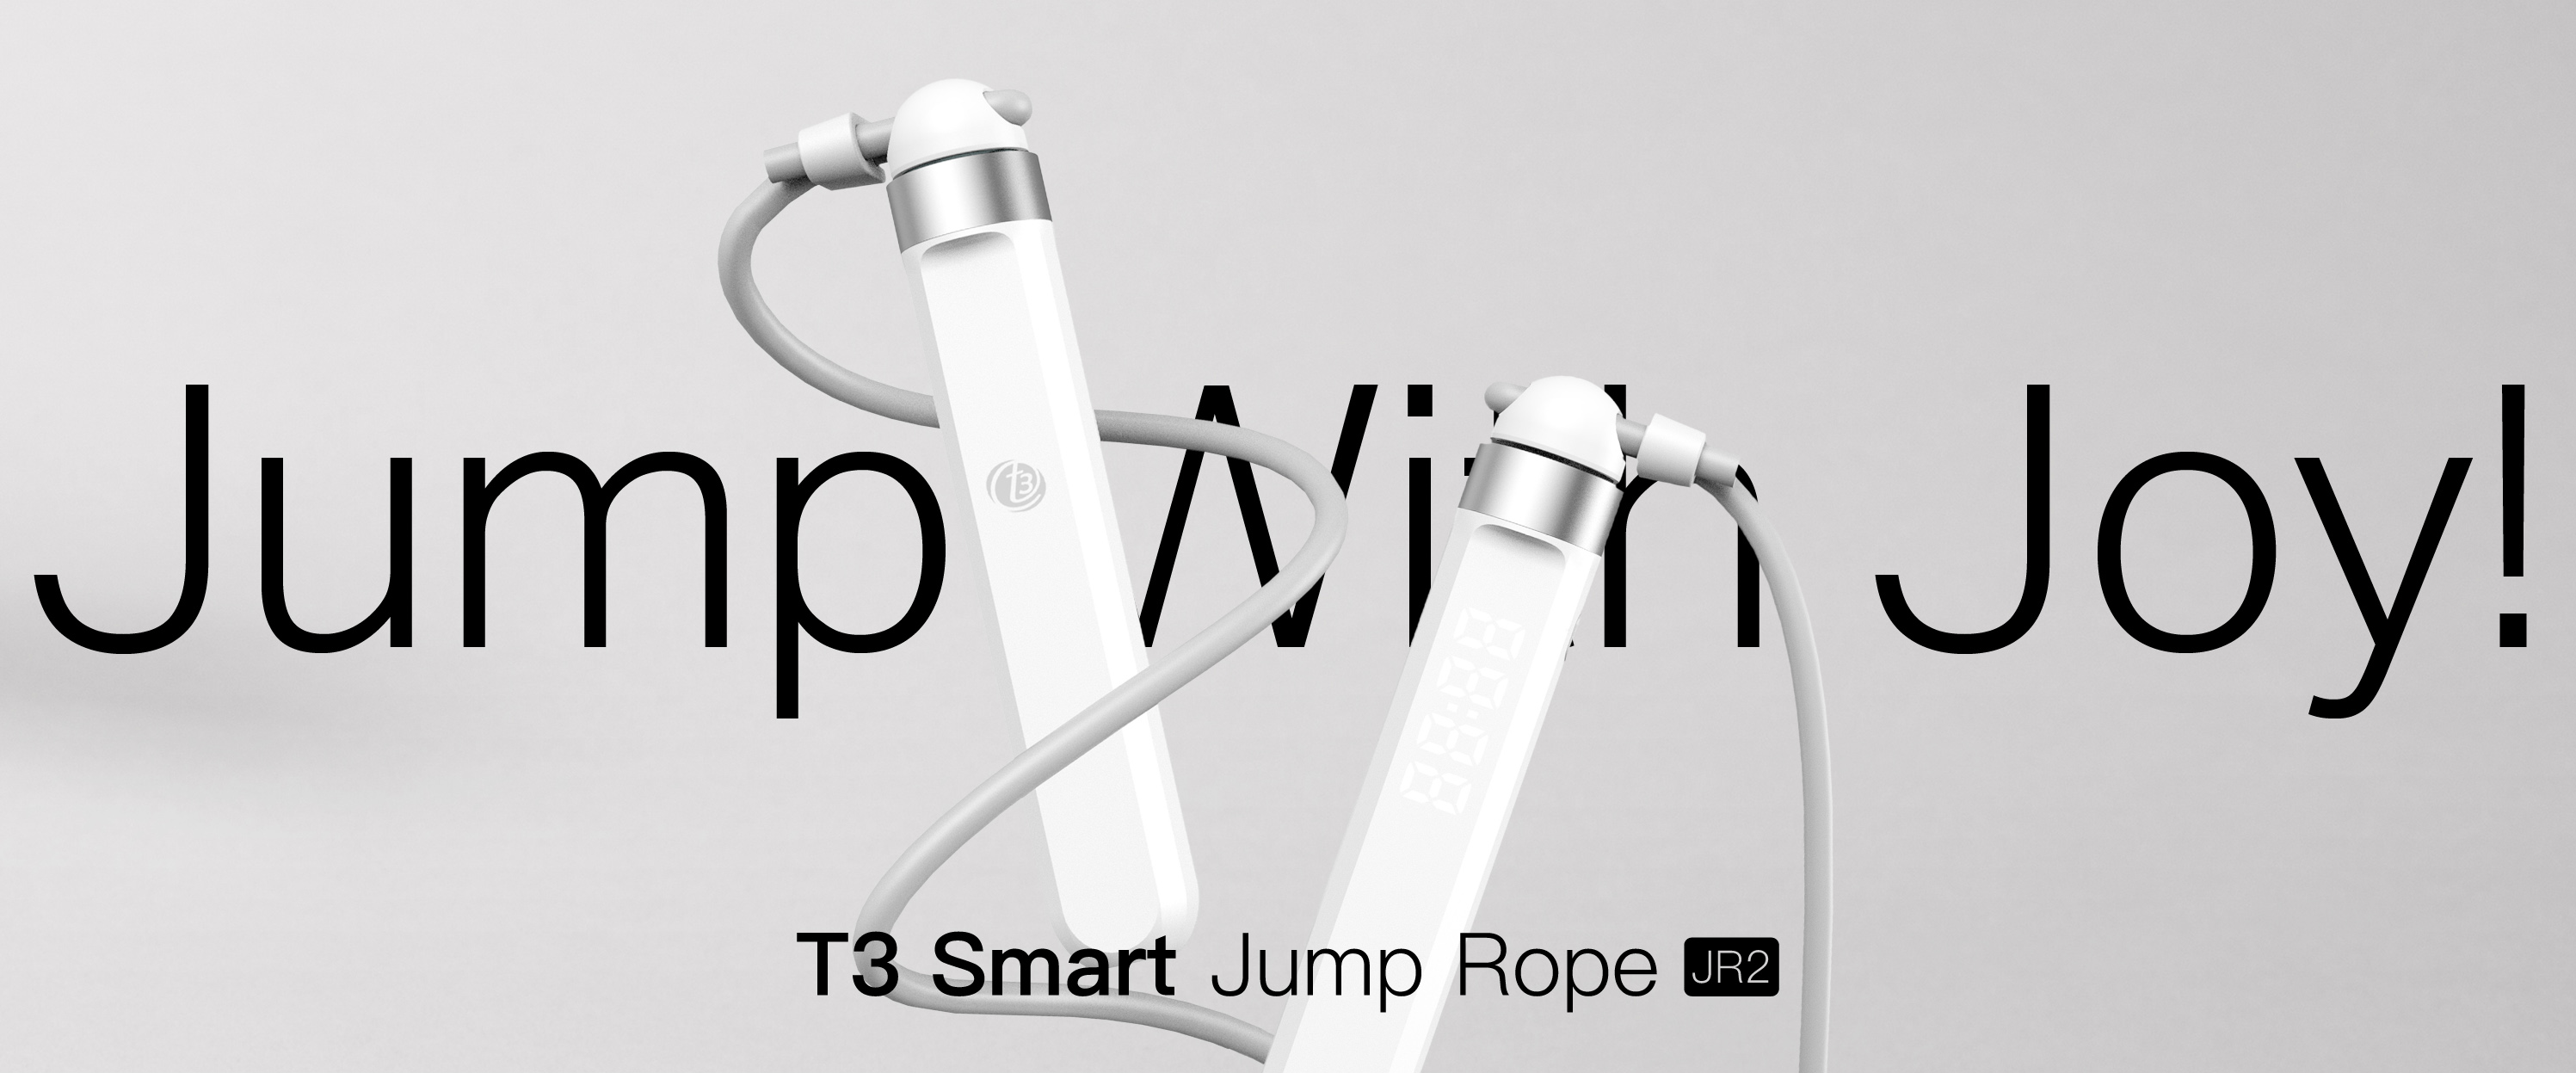 T3 Smart Jump Rope JR2